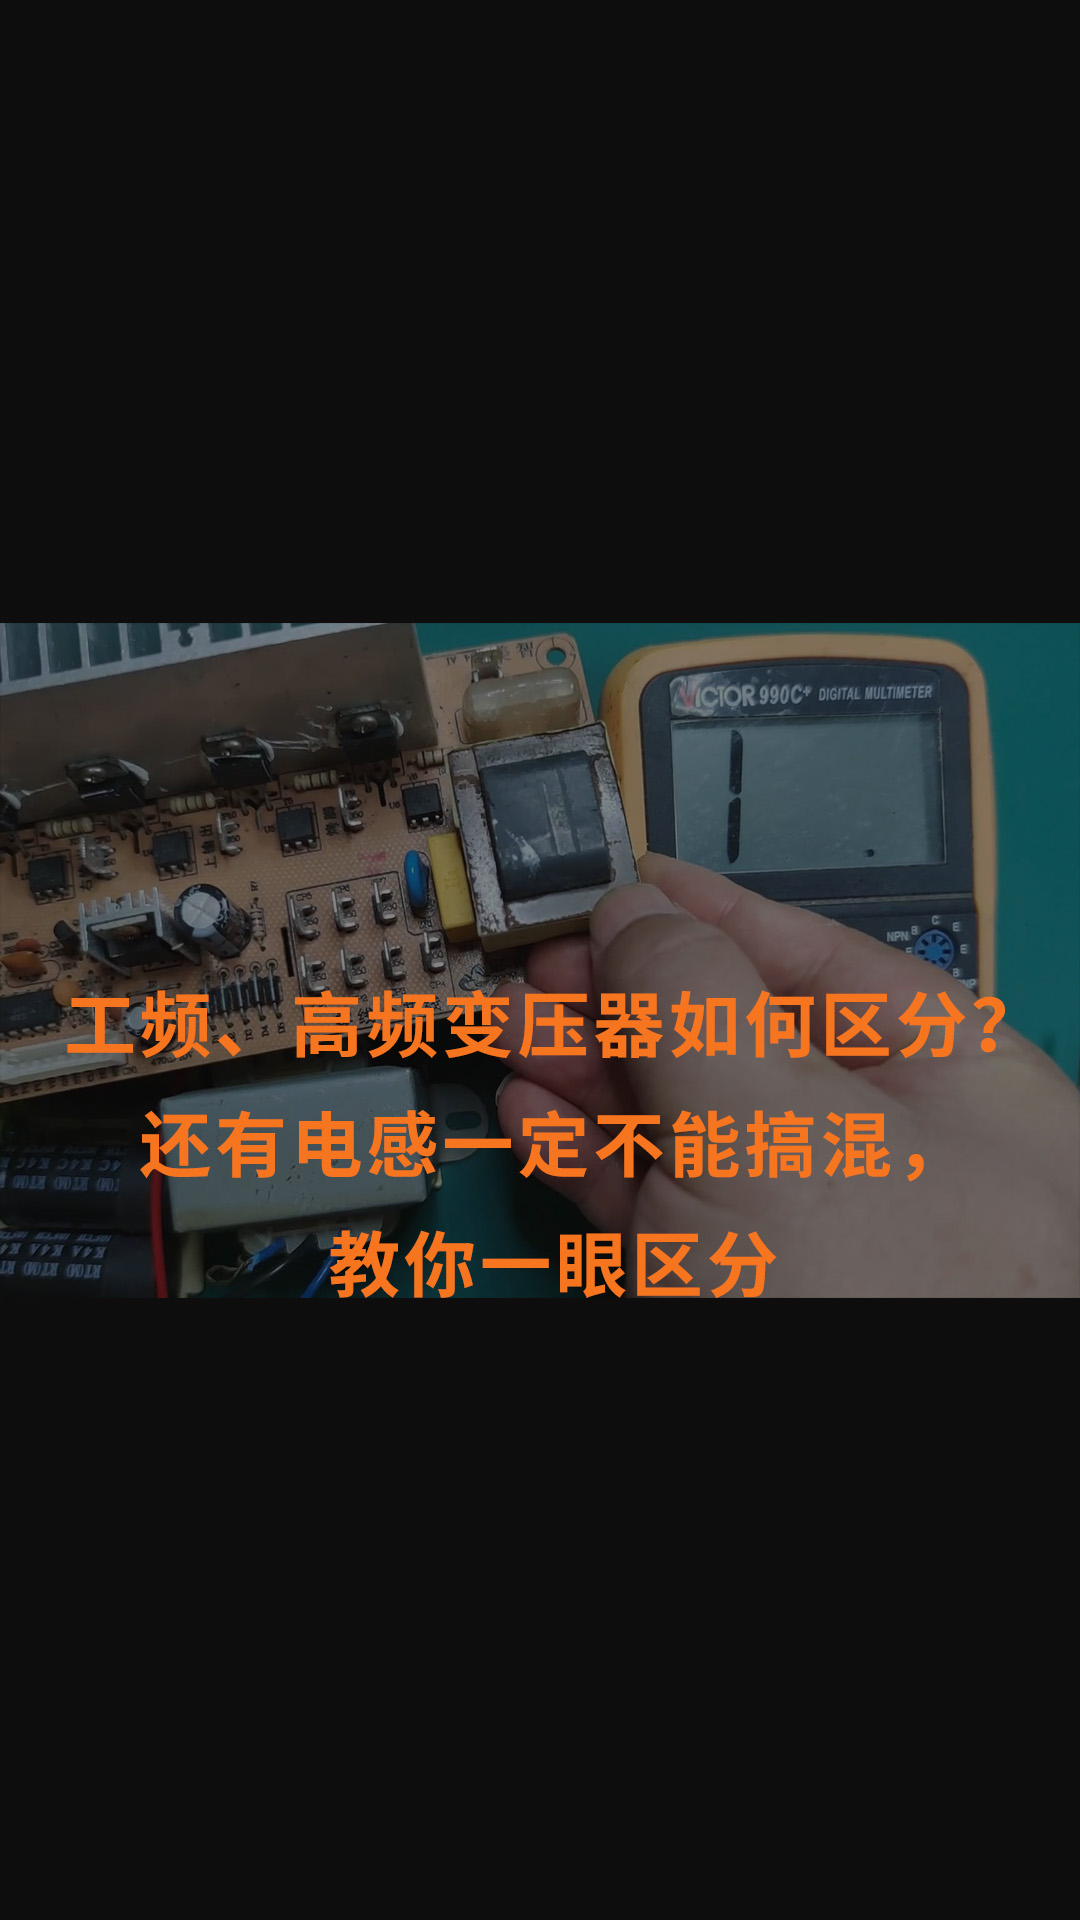 工频、高频变压器如何区分？还有电感一定不能搞混，教你一眼区分